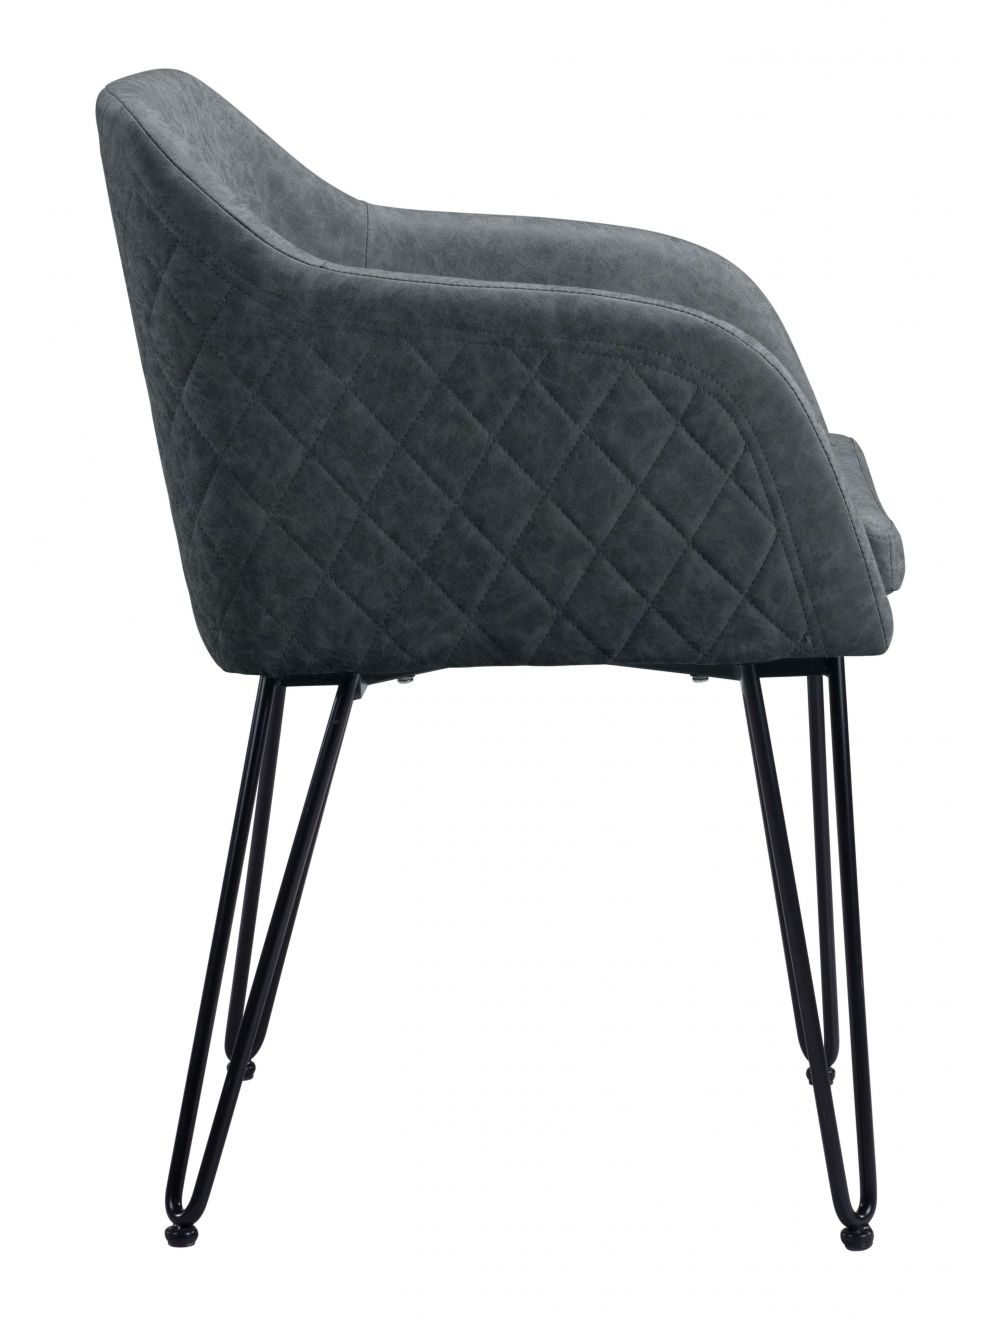 Braxton Dining Chair (Set of 2) Vintage Gray